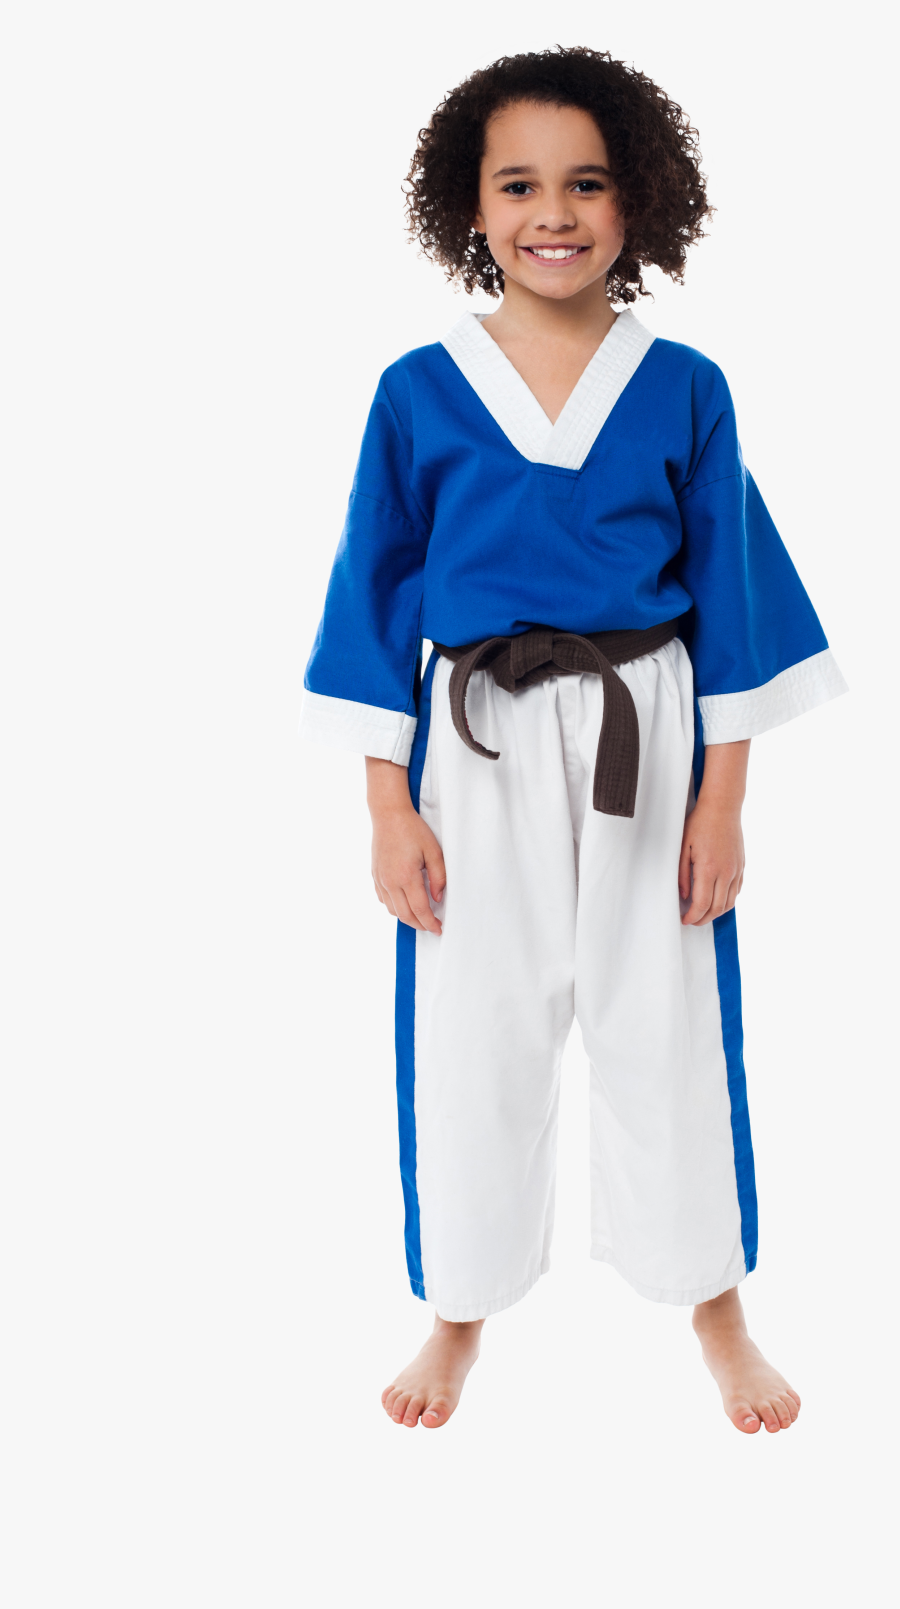 Karate Girl Png Image - Karate, Transparent Clipart